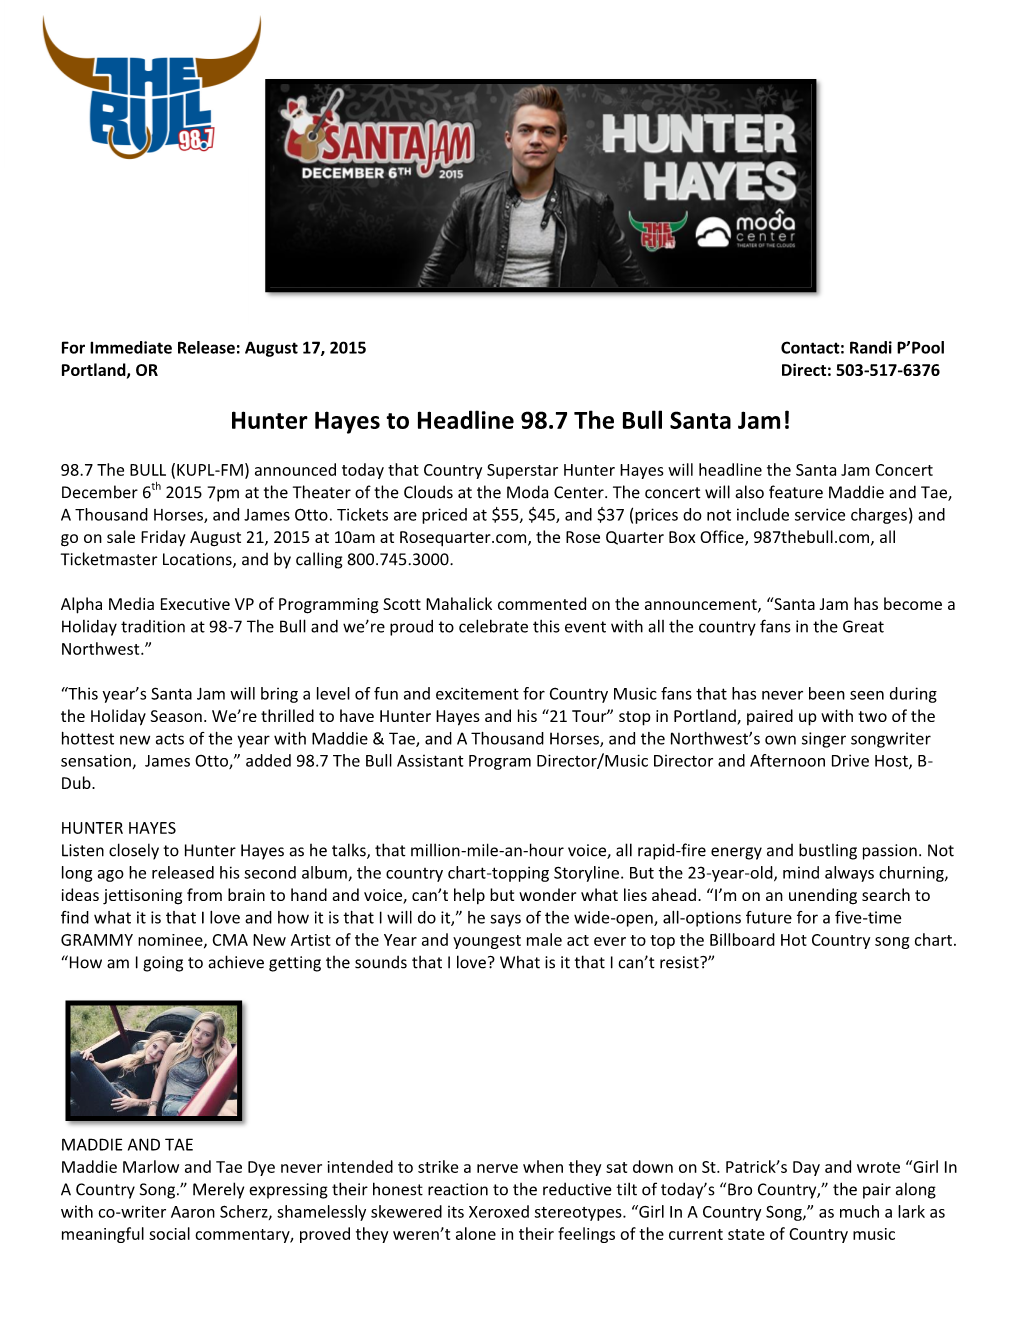 Hunter Hayes to Headline 98.7 the Bull Santa Jam!